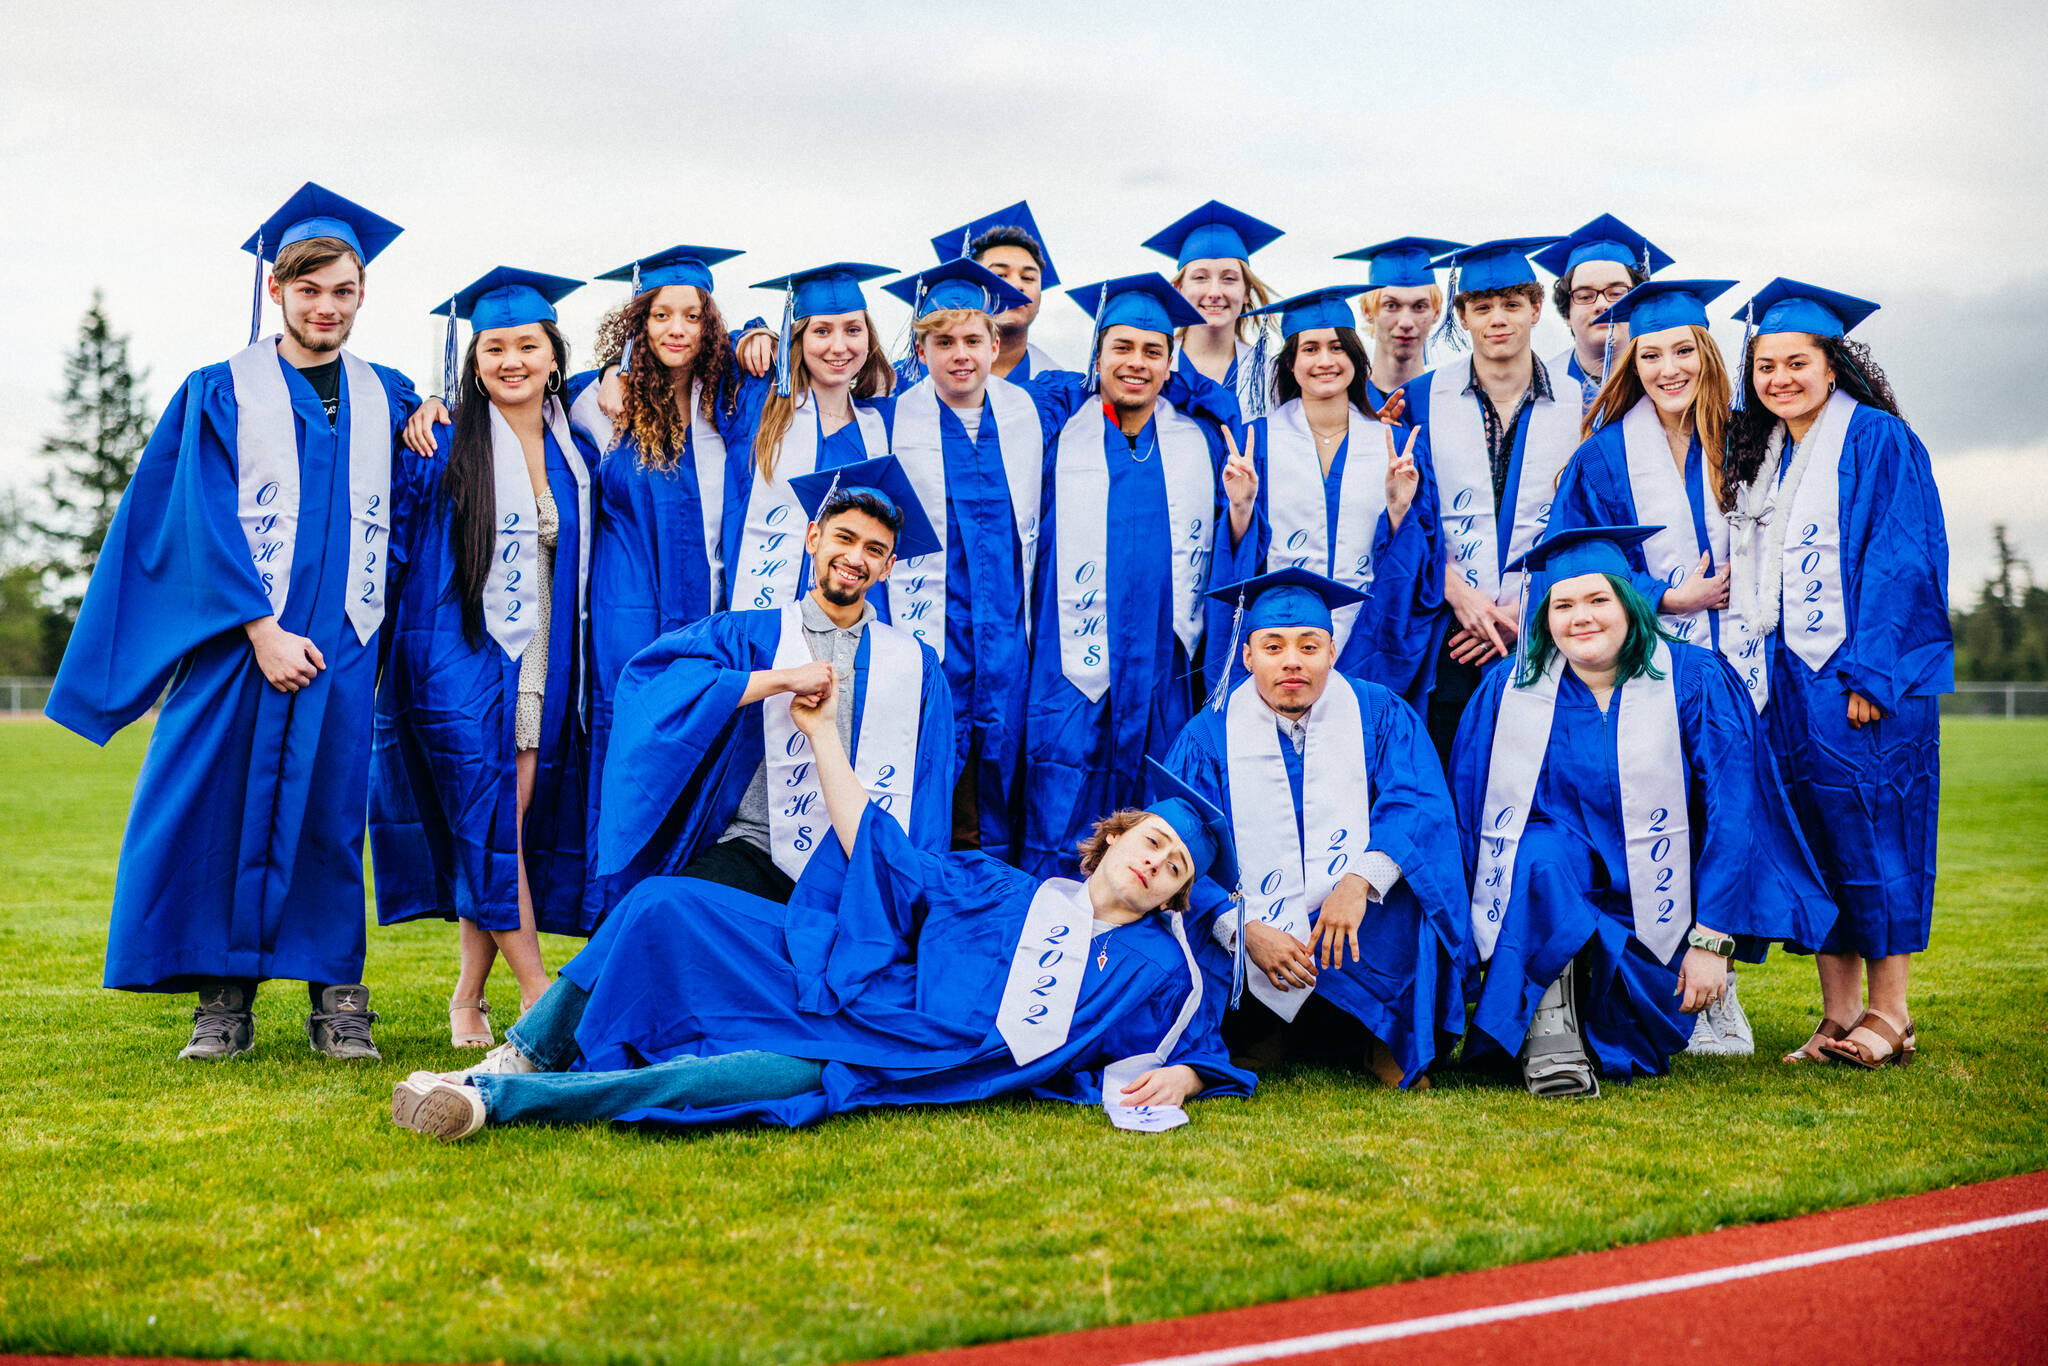 Taj Howe photo/contributed photo
The Orcas Island High School class of 2022 graduated on June 12.